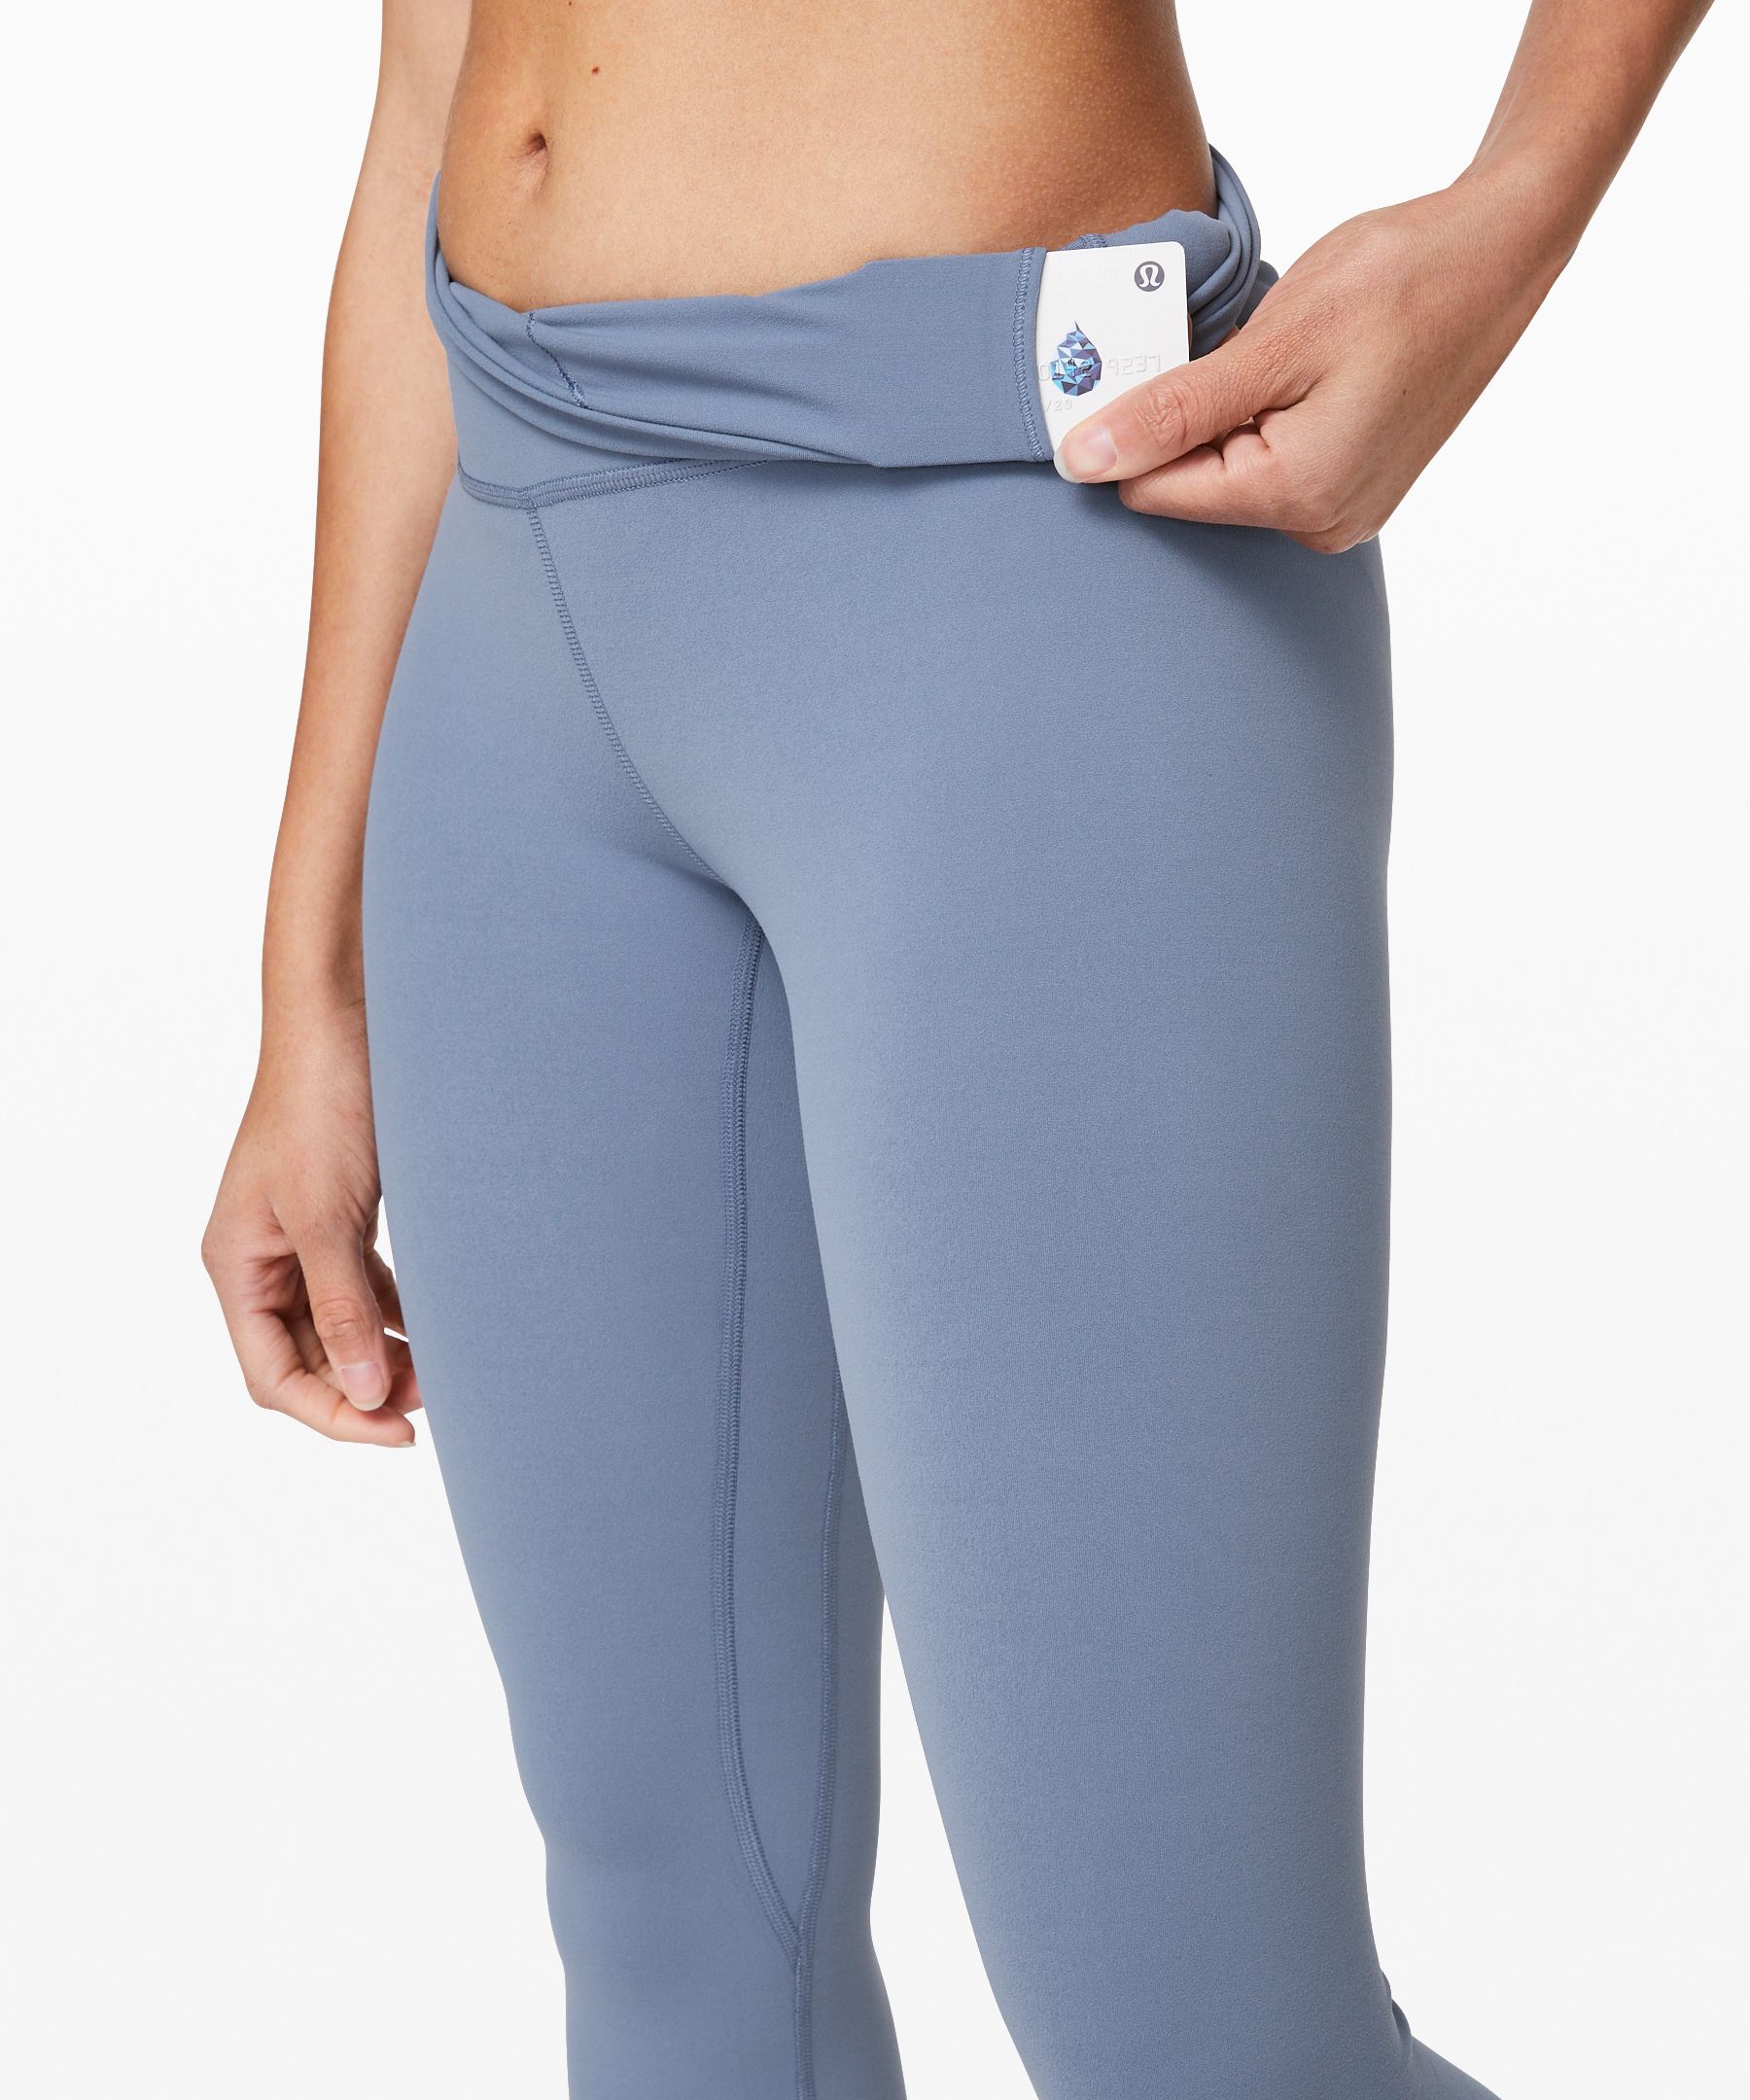 Lululemon align leggings 25” oasis blue size 6 - Athletic apparel